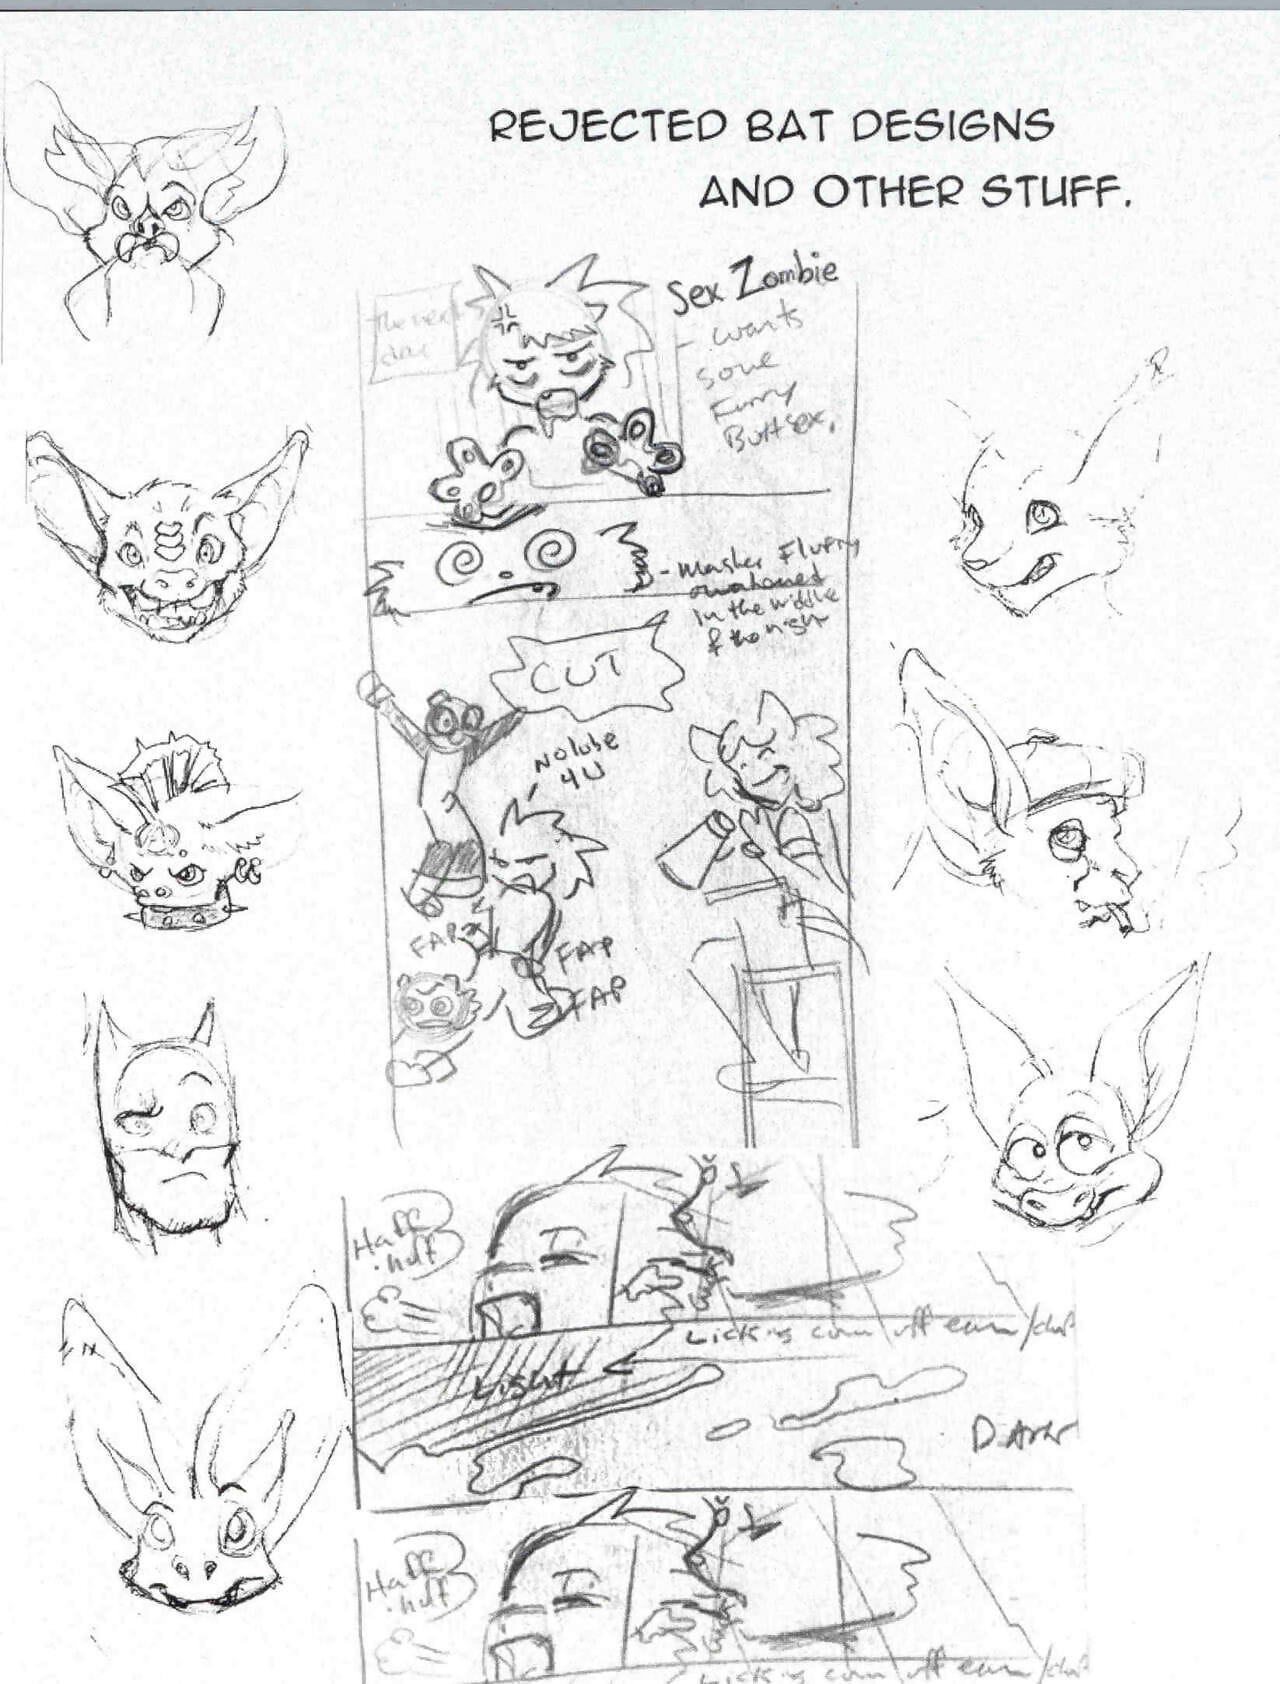 Demon Hunter page 1